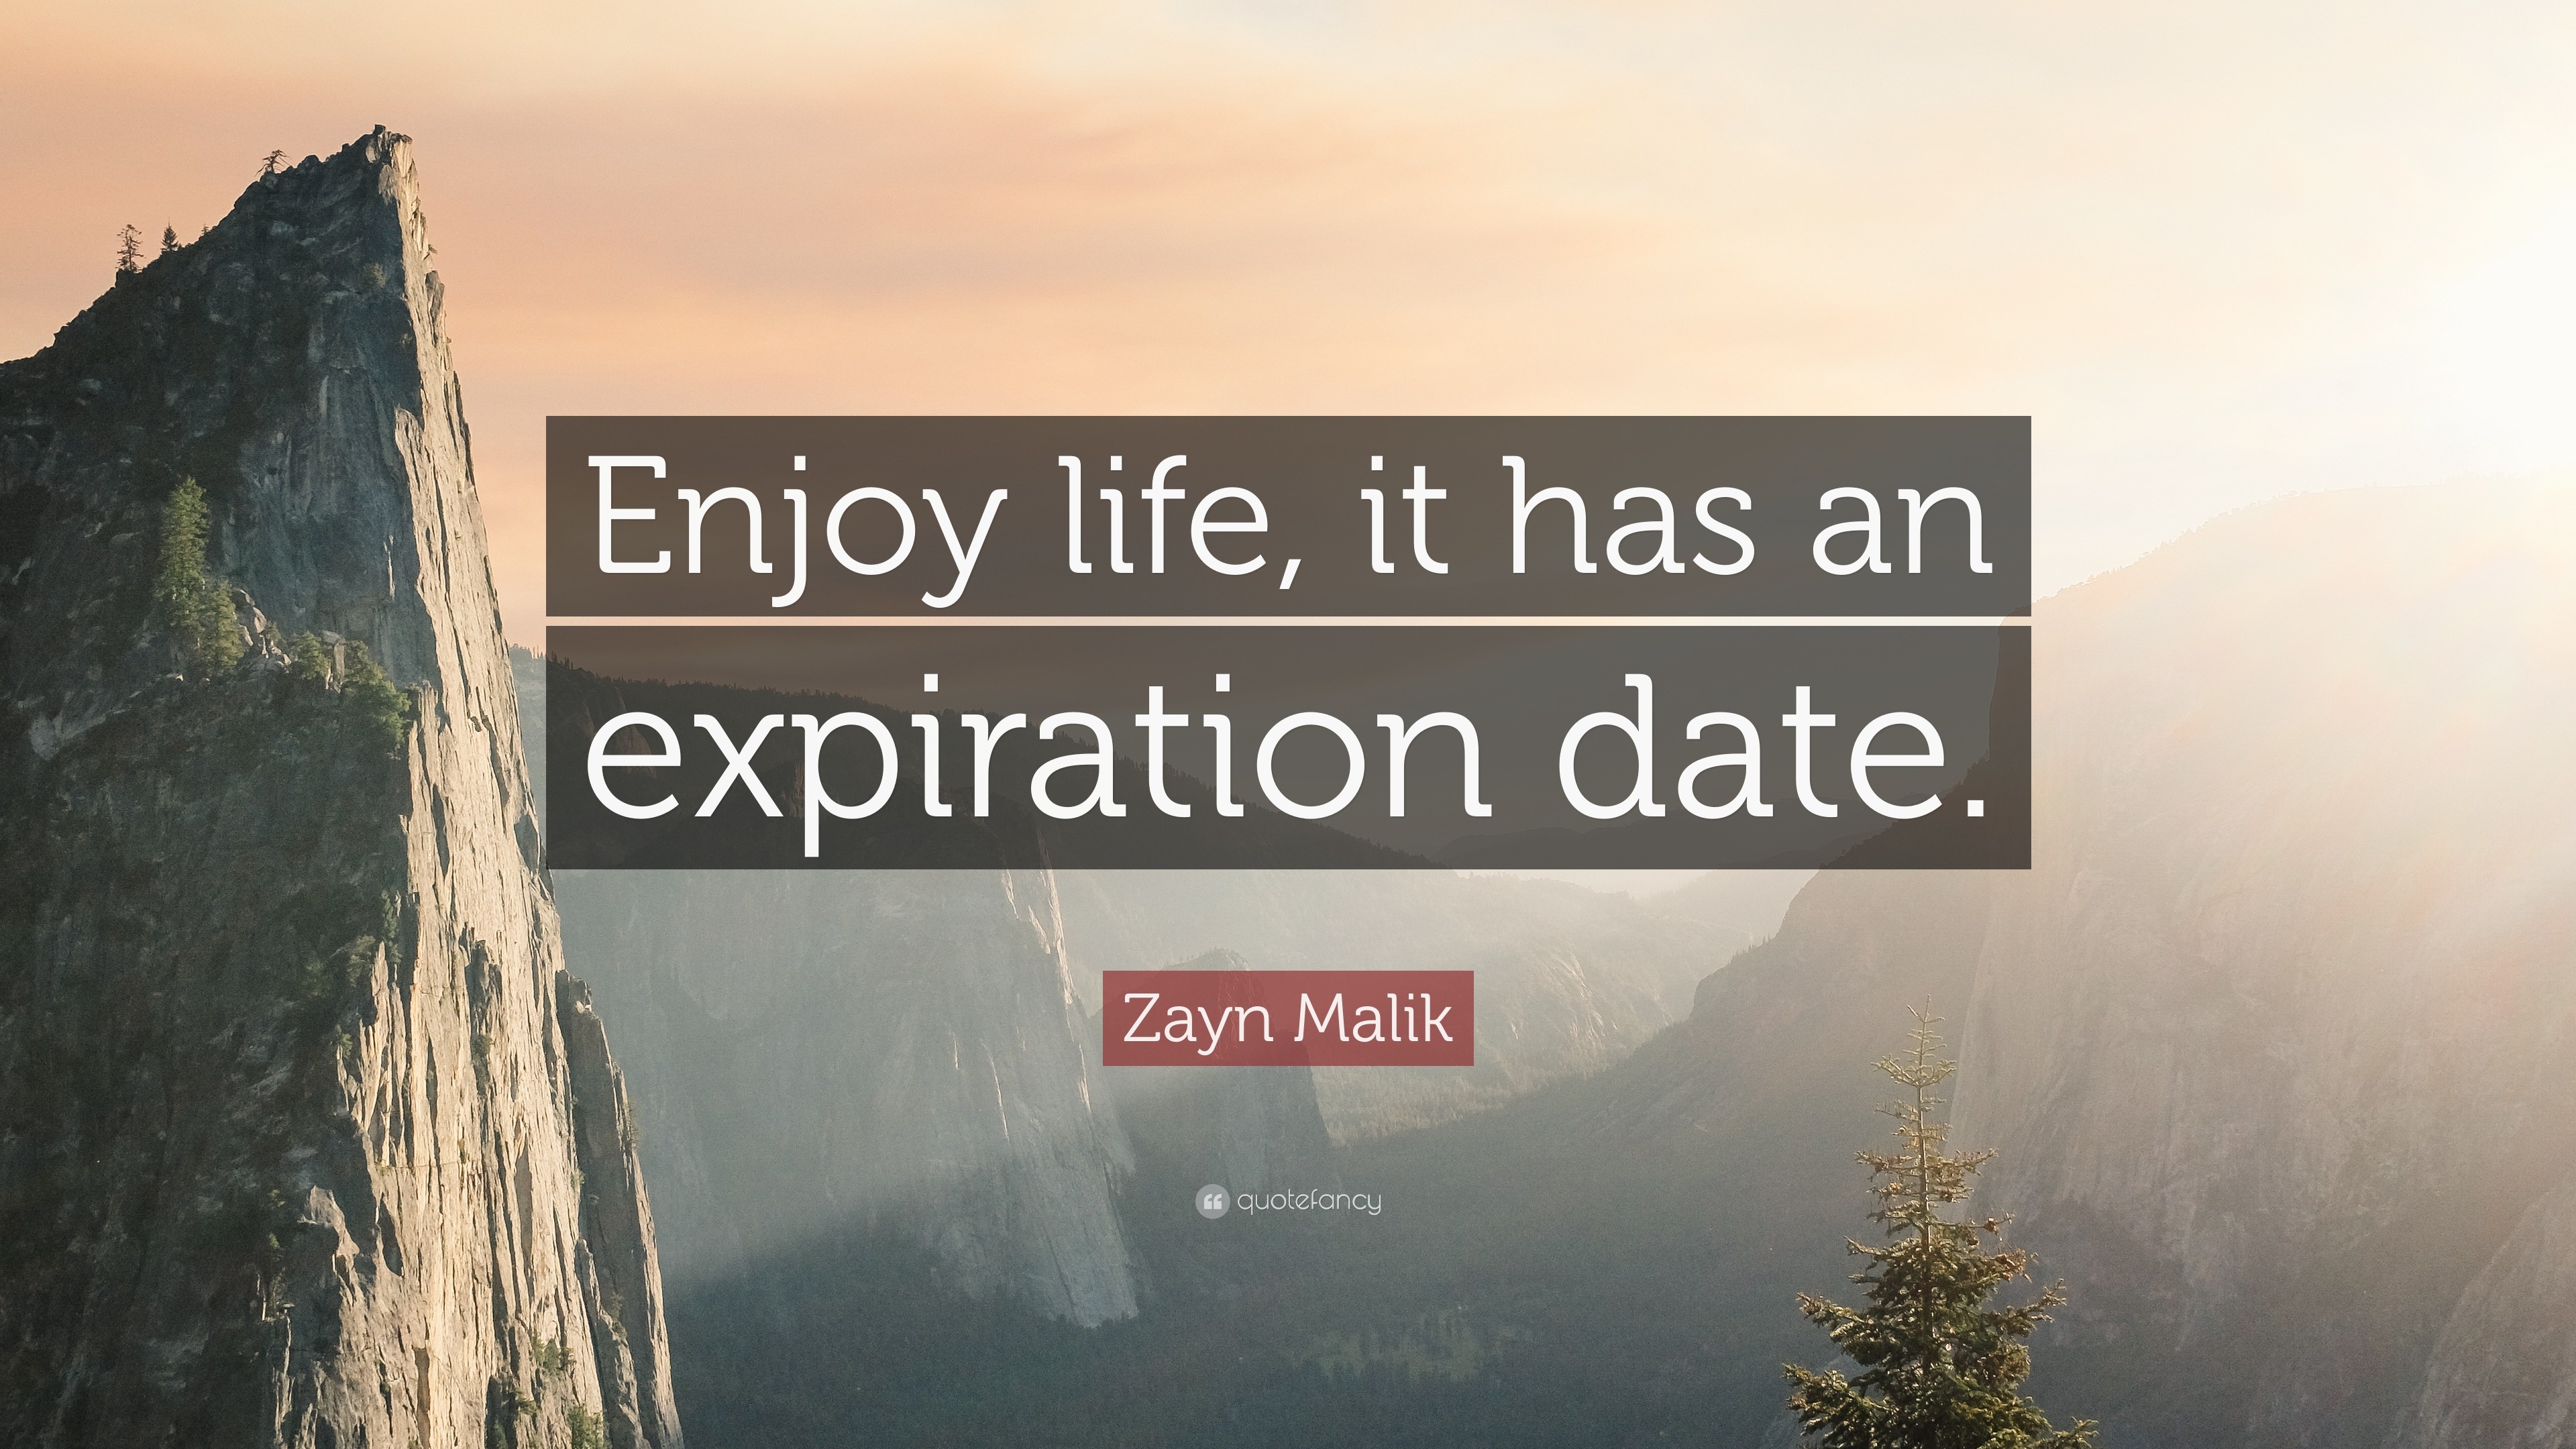 Zayn Malik Quote “Enjoy life it has an expiration date ”